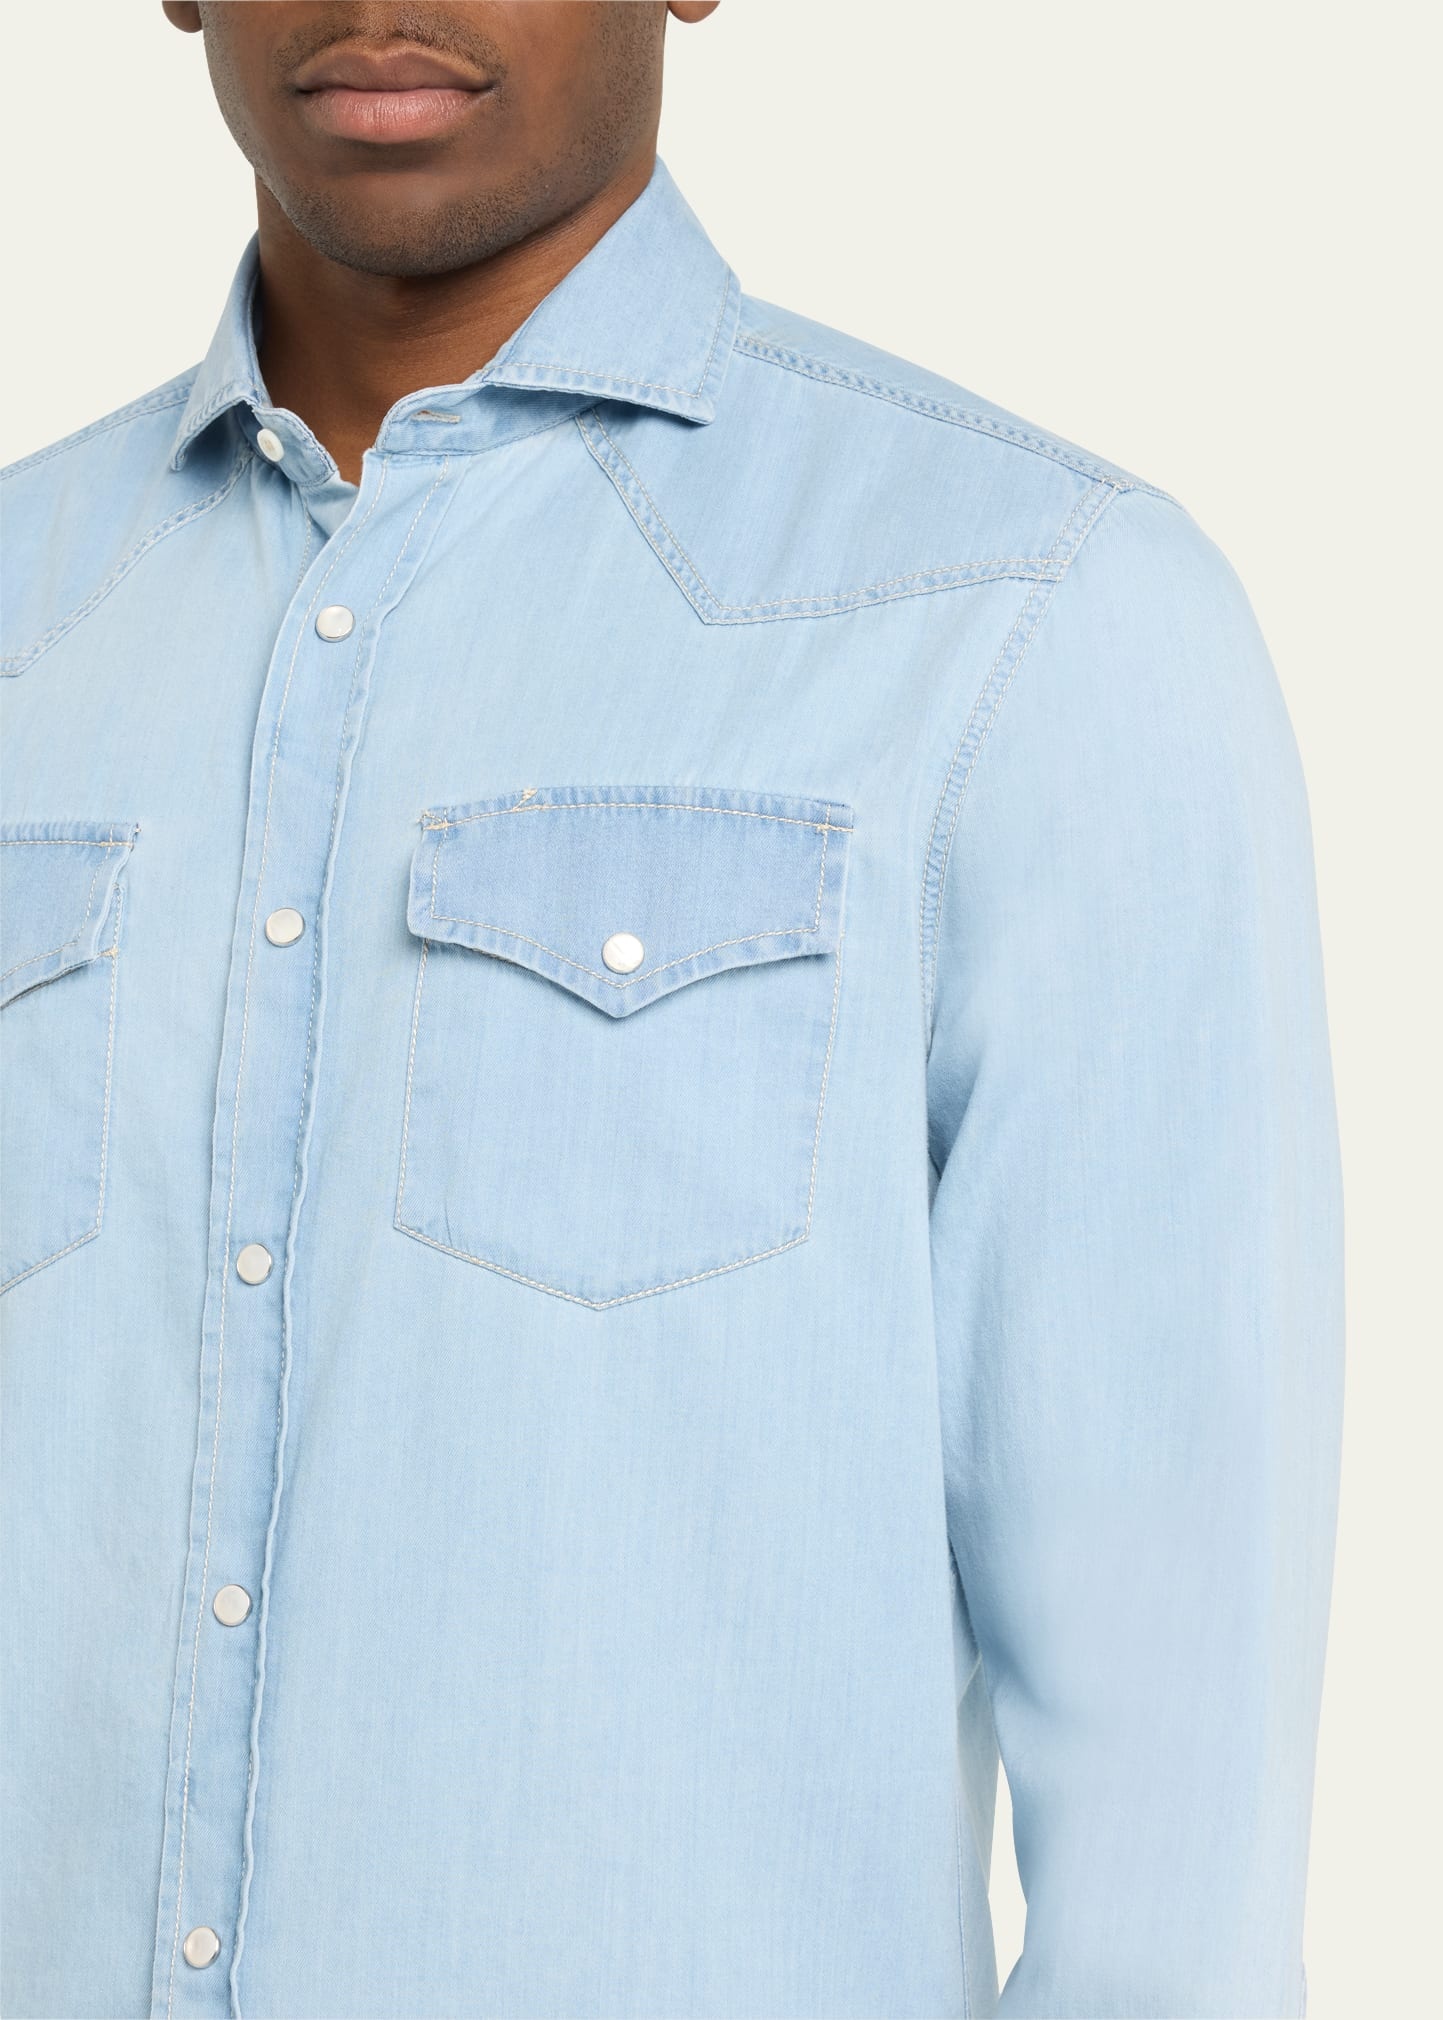 Men's Slim-Fit Cotton Western Button-Down Shirt - 5